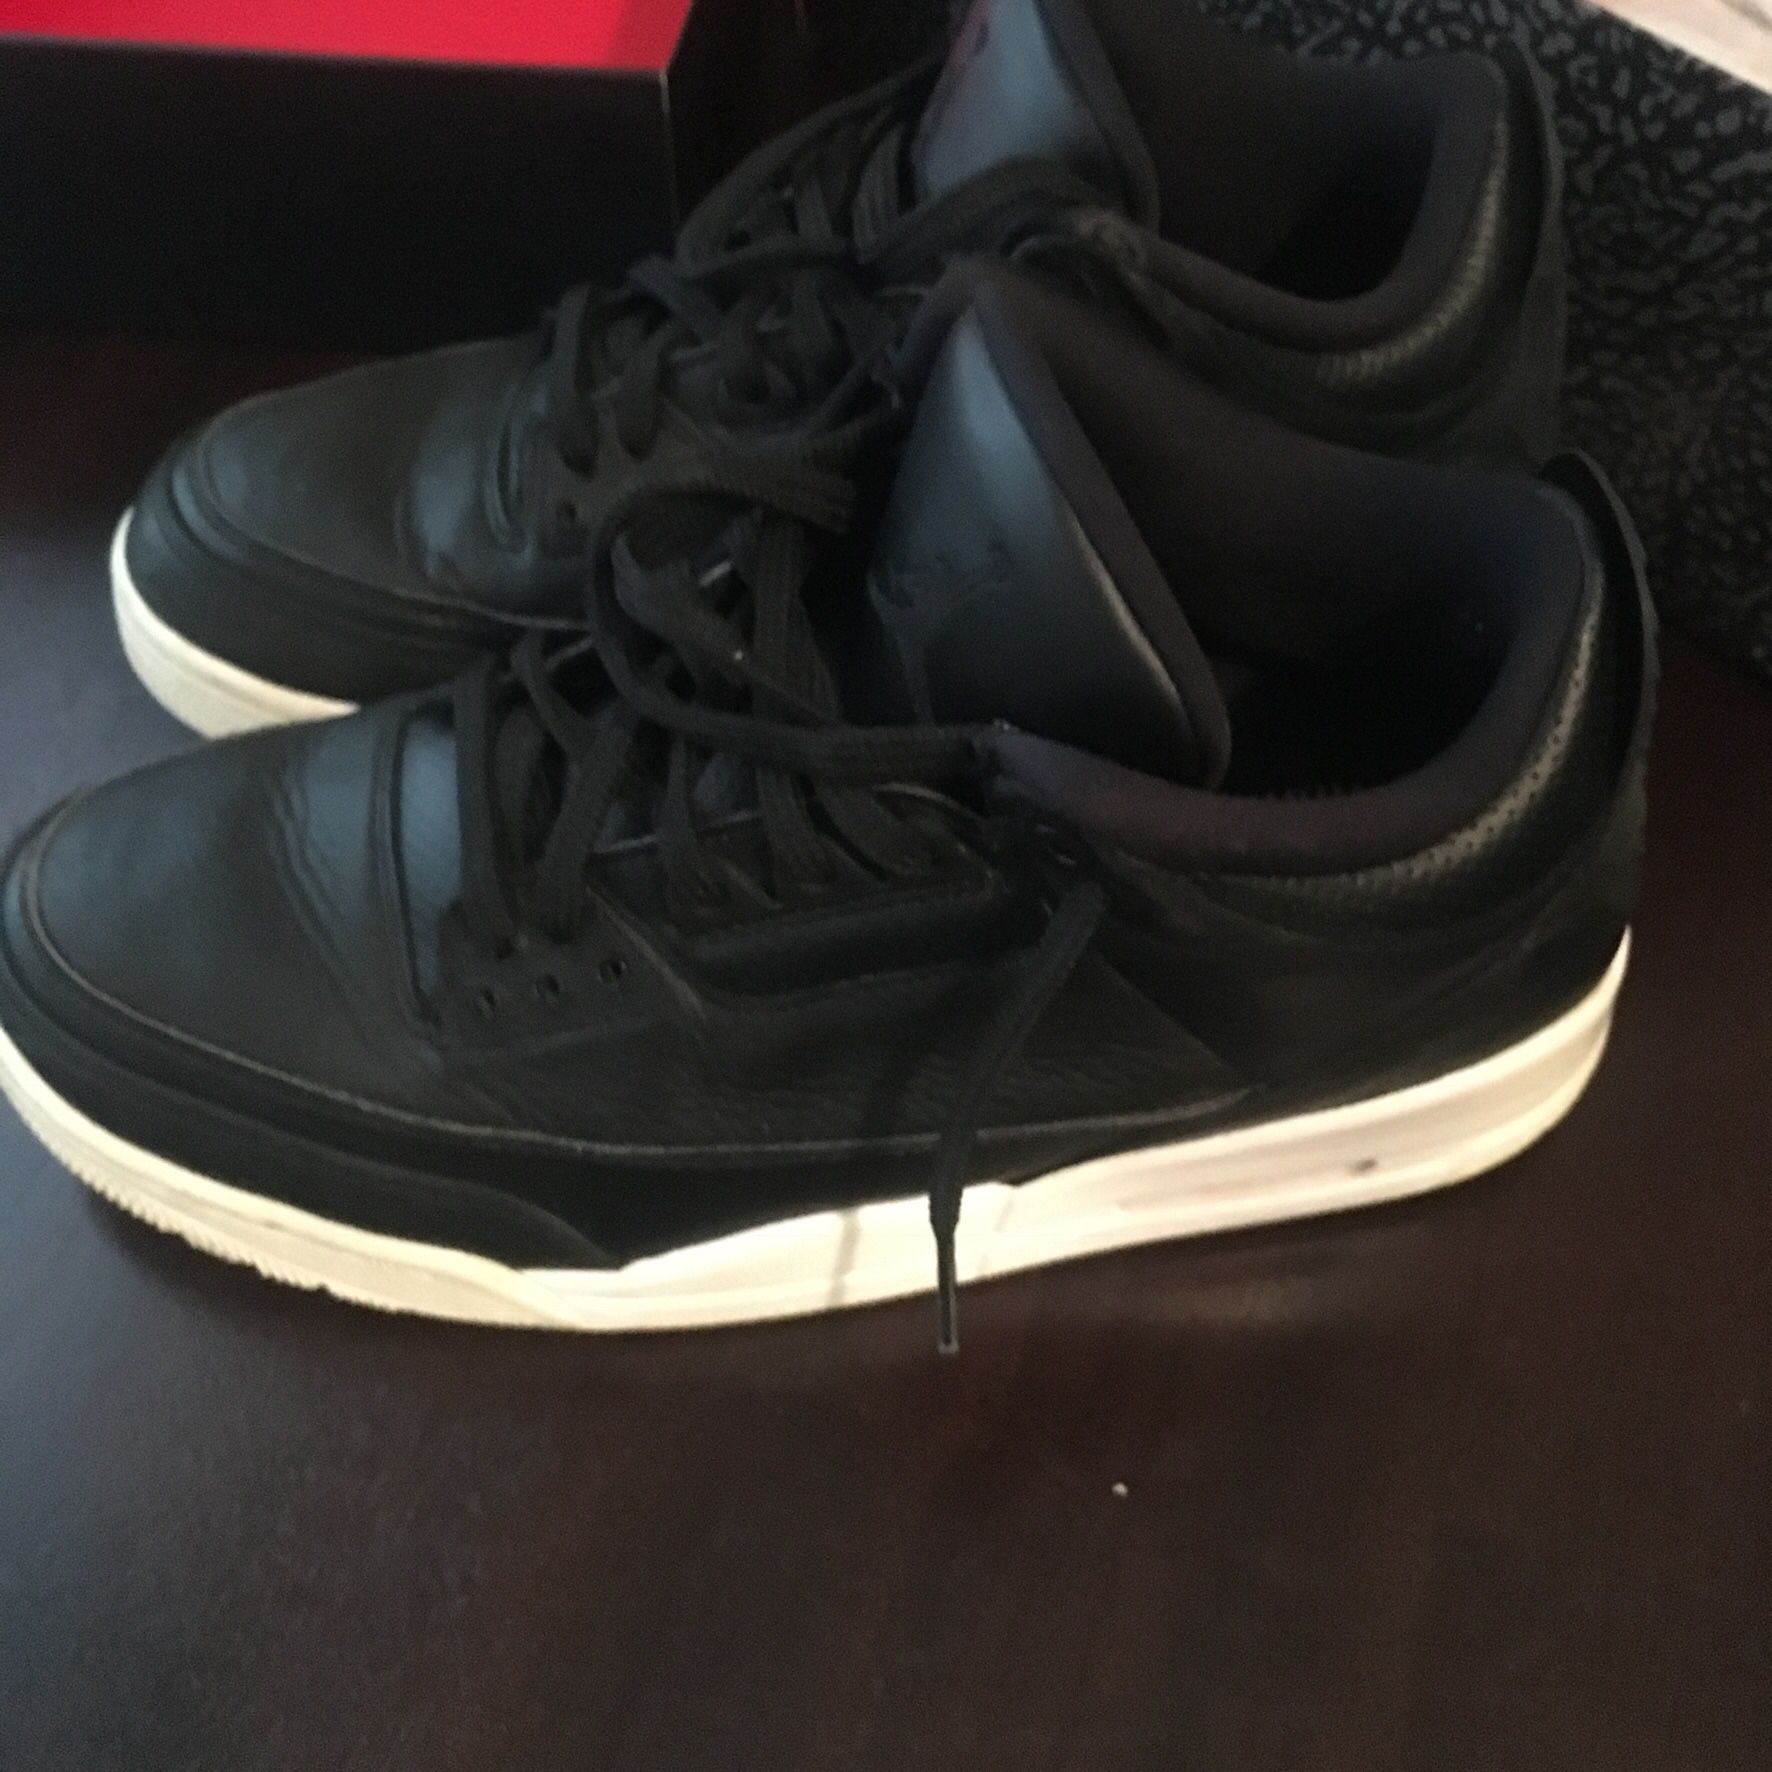 Retro Air Jordan size 9.5